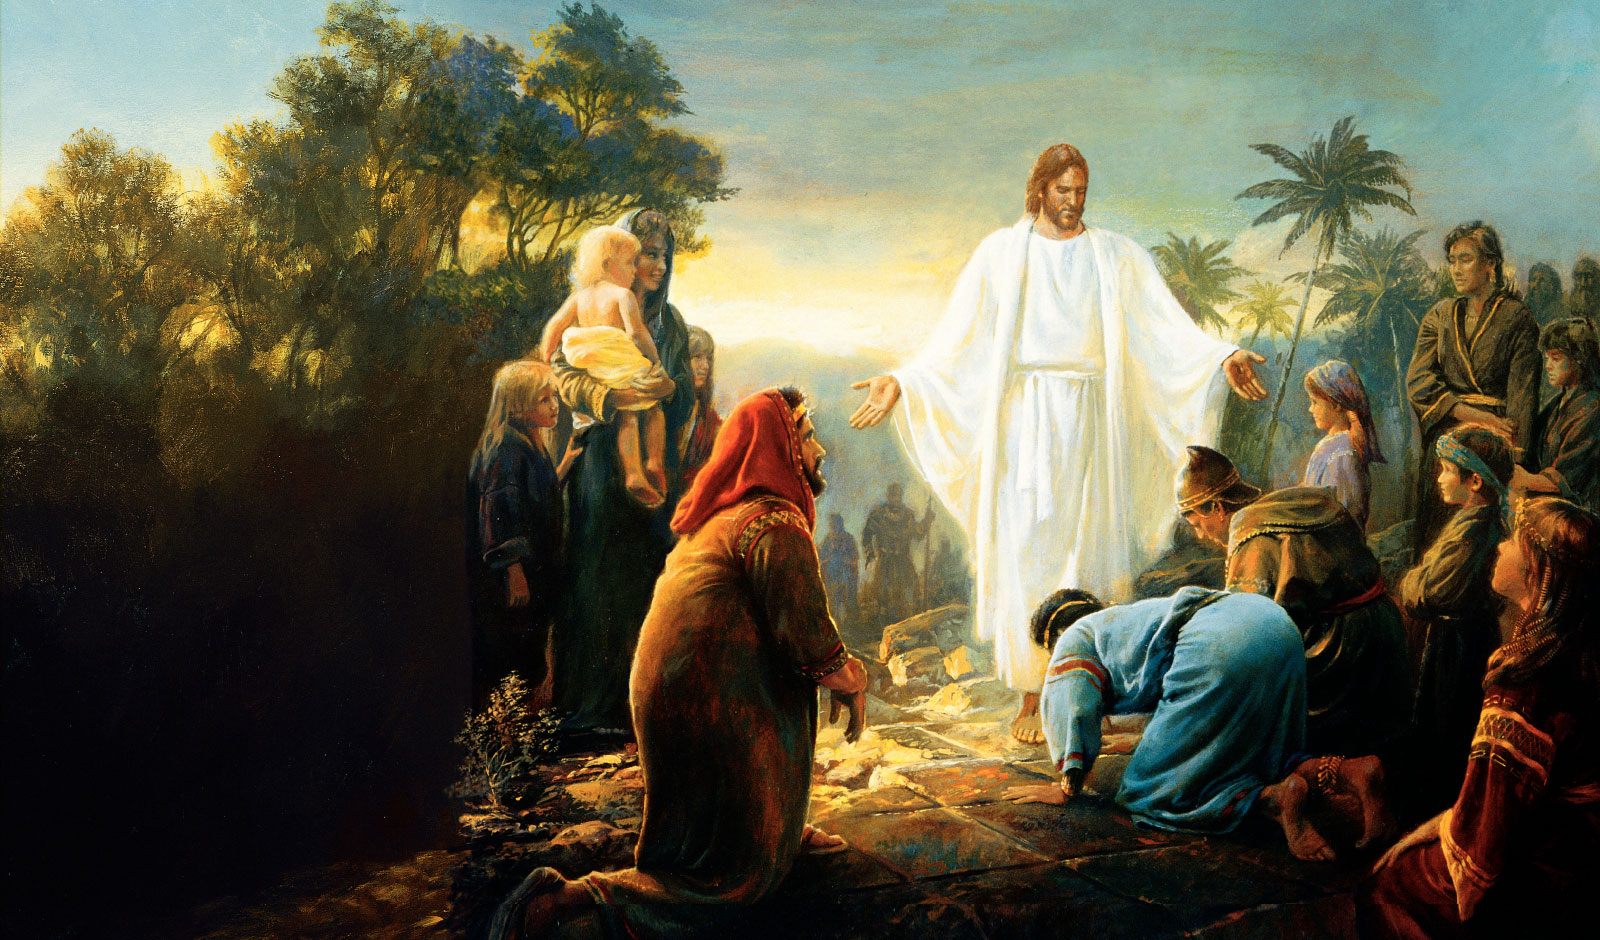 Christ revealing himself to the people of the New World. Image via sistereskanderl.com